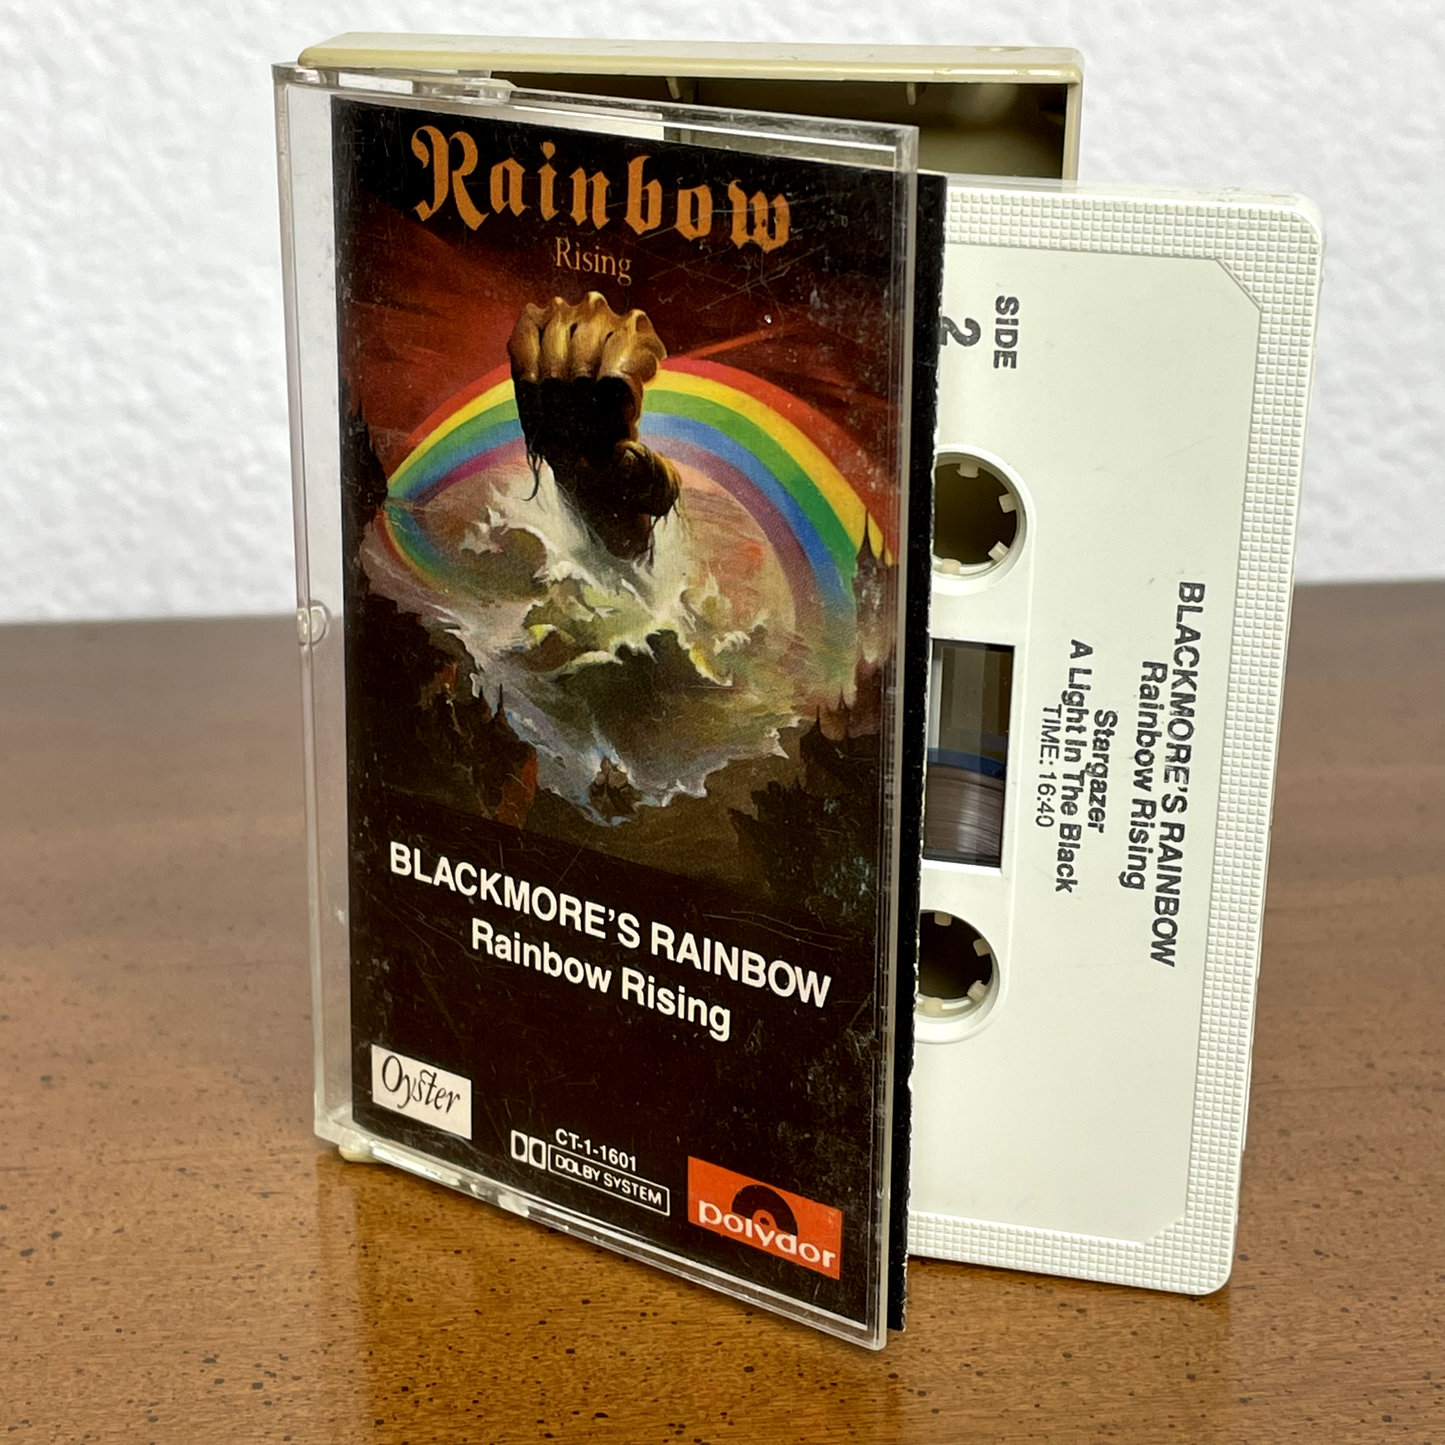 Rainbow - Rising cassette tape